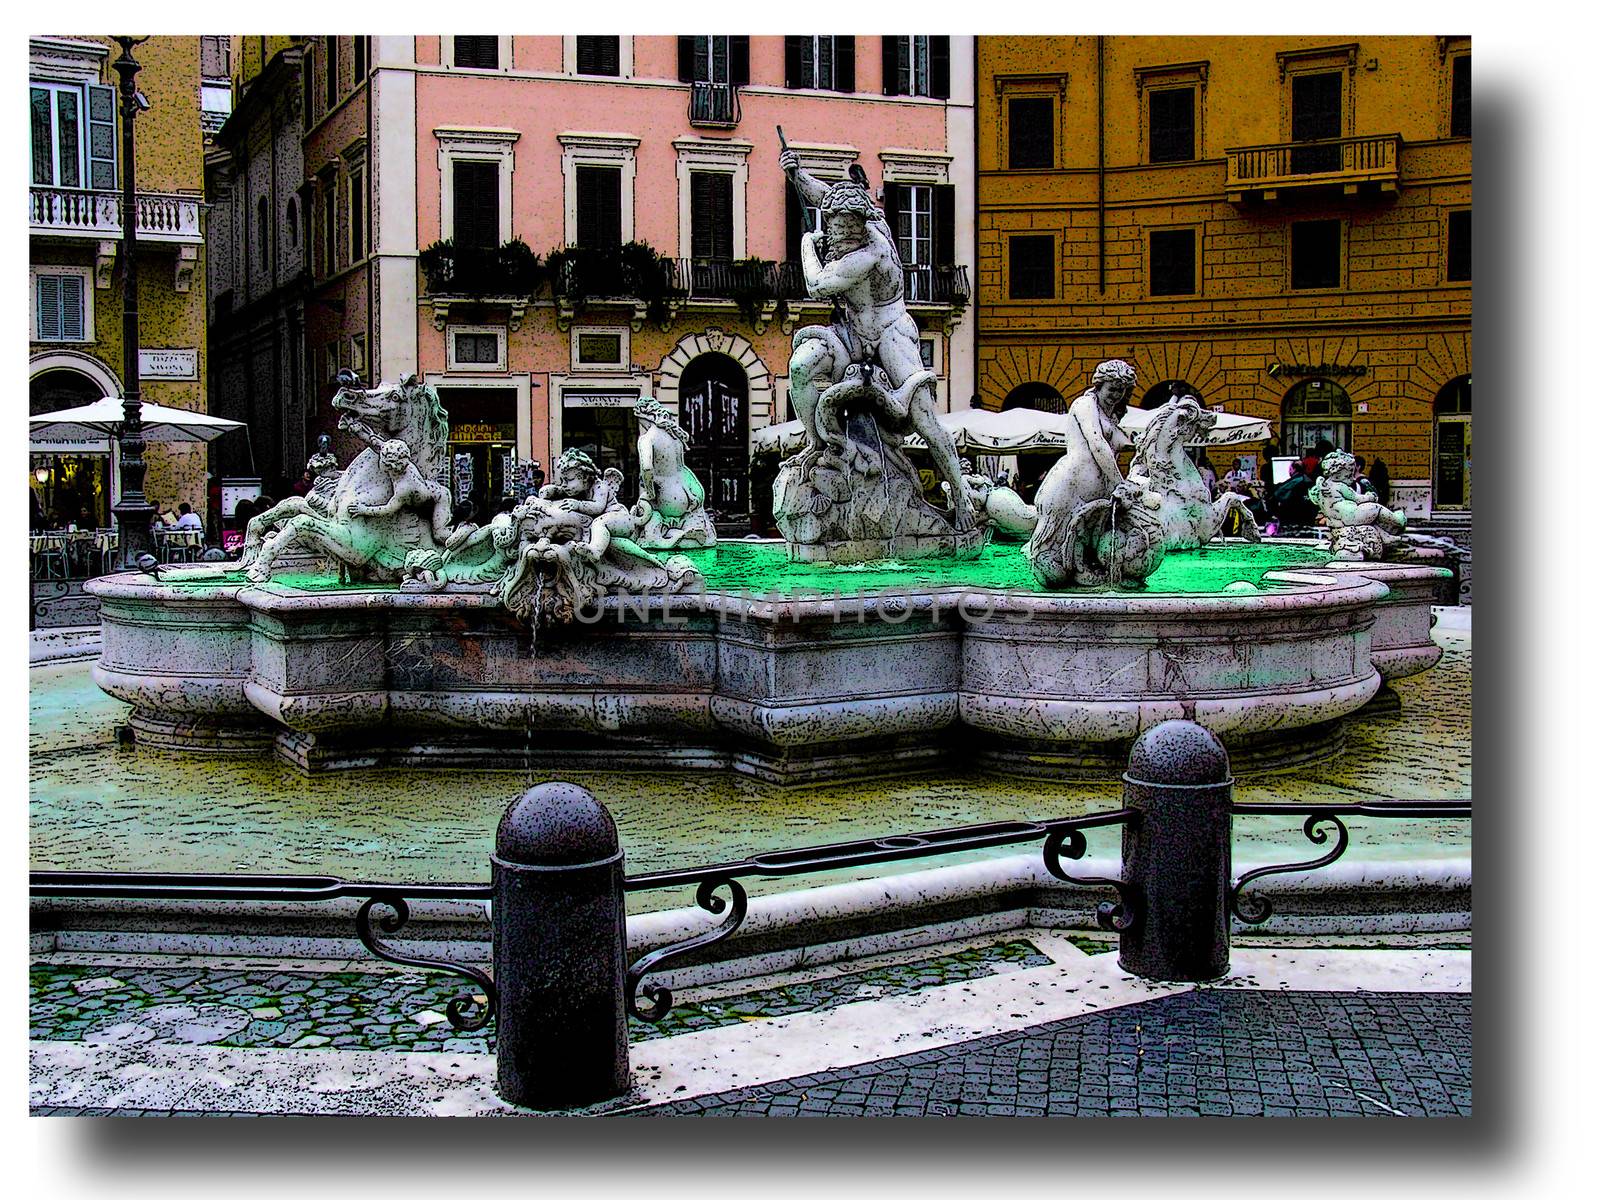 The fountain of Neptune on Navona square-rome by konradkerker